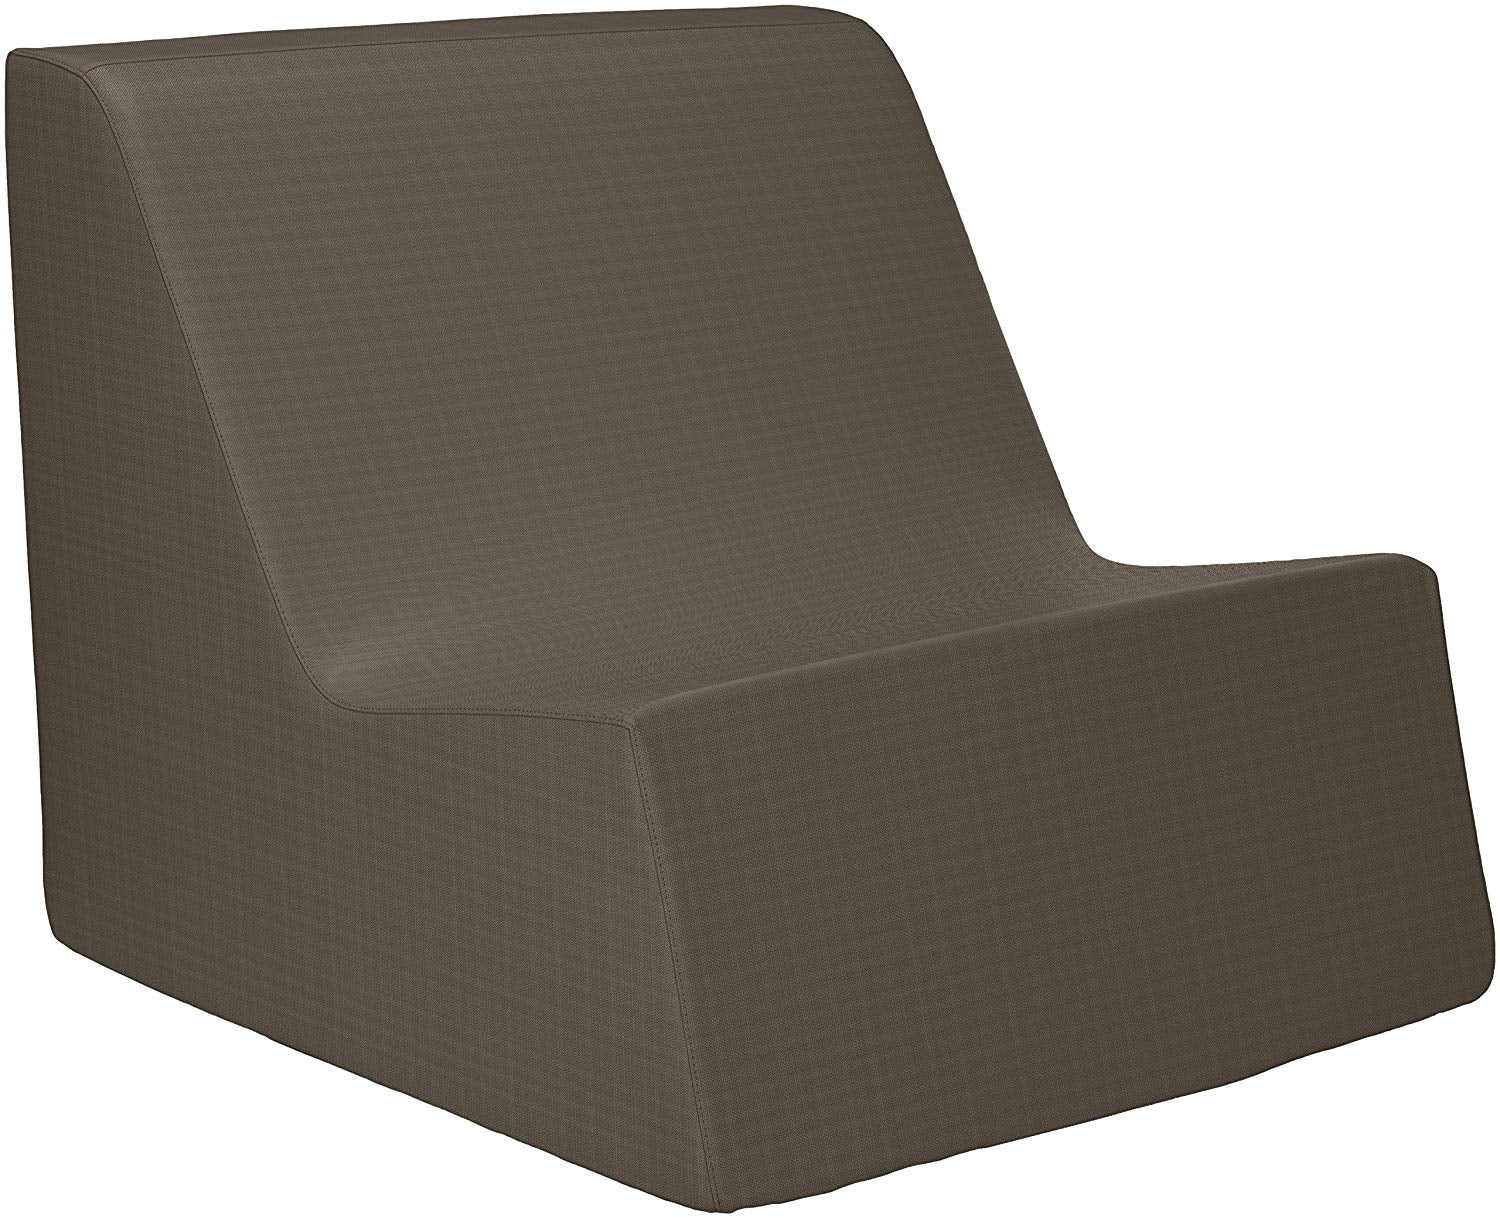 La Fete Design Furniture Check Deep Lounge Chair at MetropolitanDecor.com